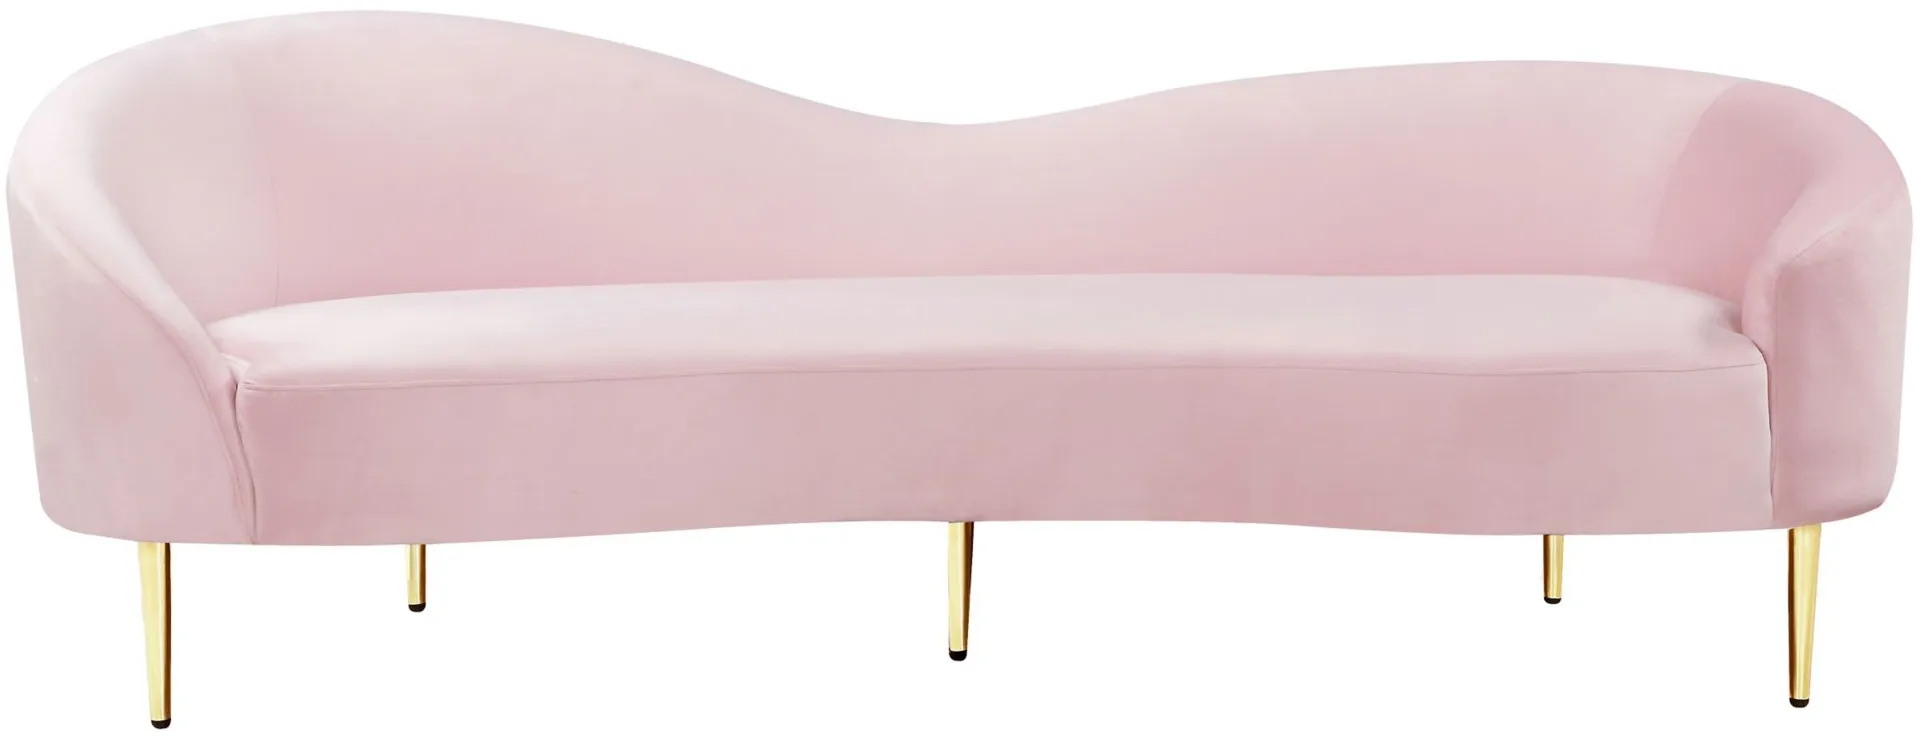 Ritz Velvet Sofa in Pink by Meridian Furniture